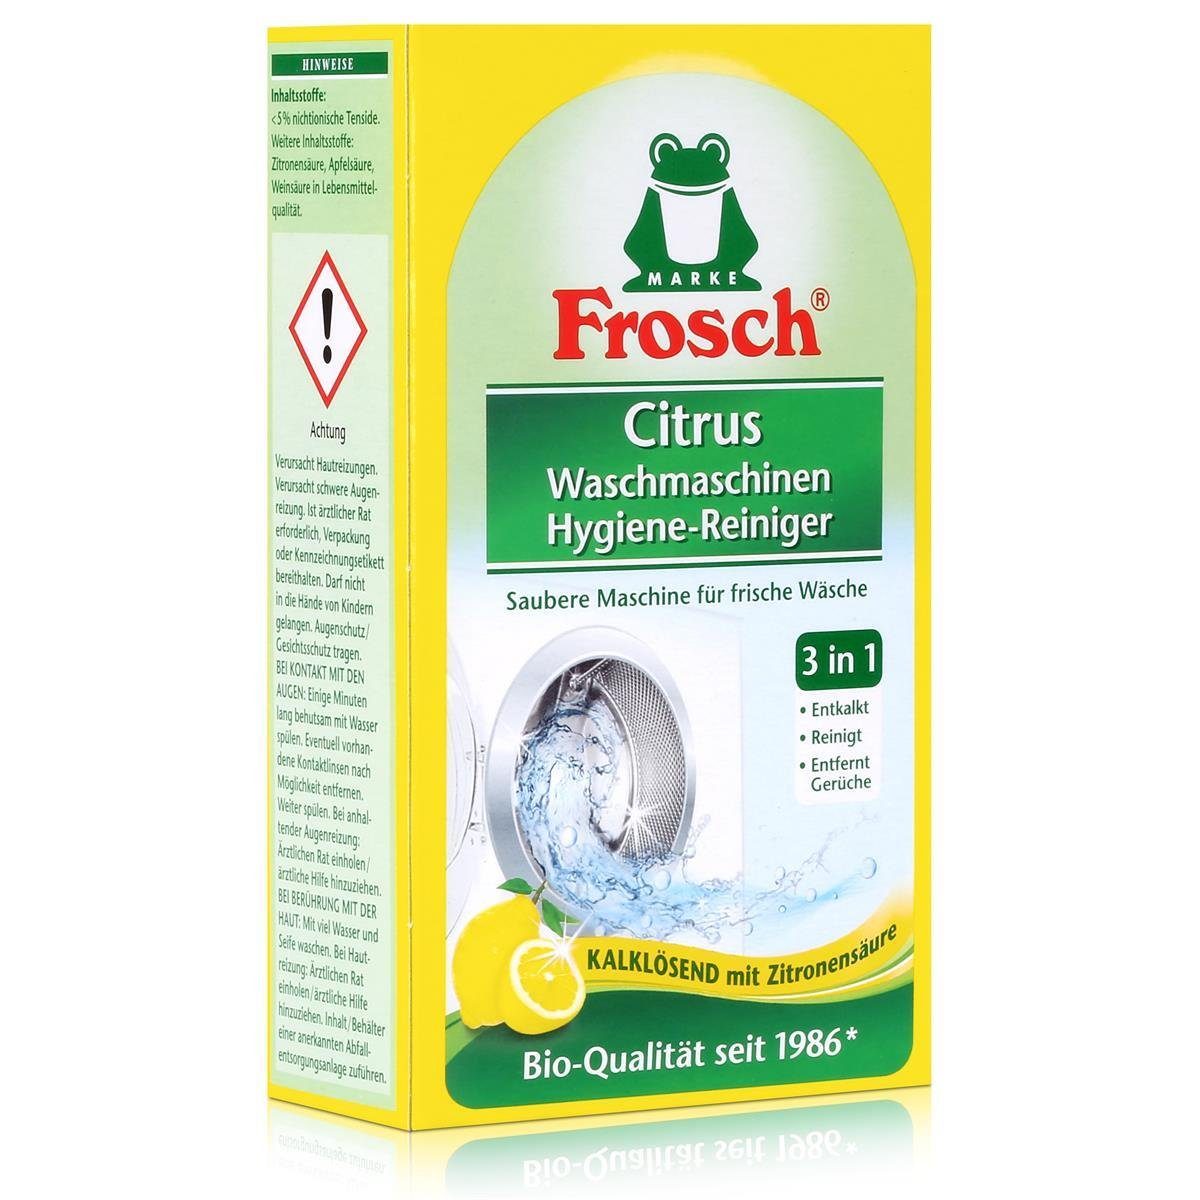 (2er FROSCH Waschmaschinen Citrus 250g Frosch - Kalklösend Spezialwaschmittel Hygiene-Reiniger P